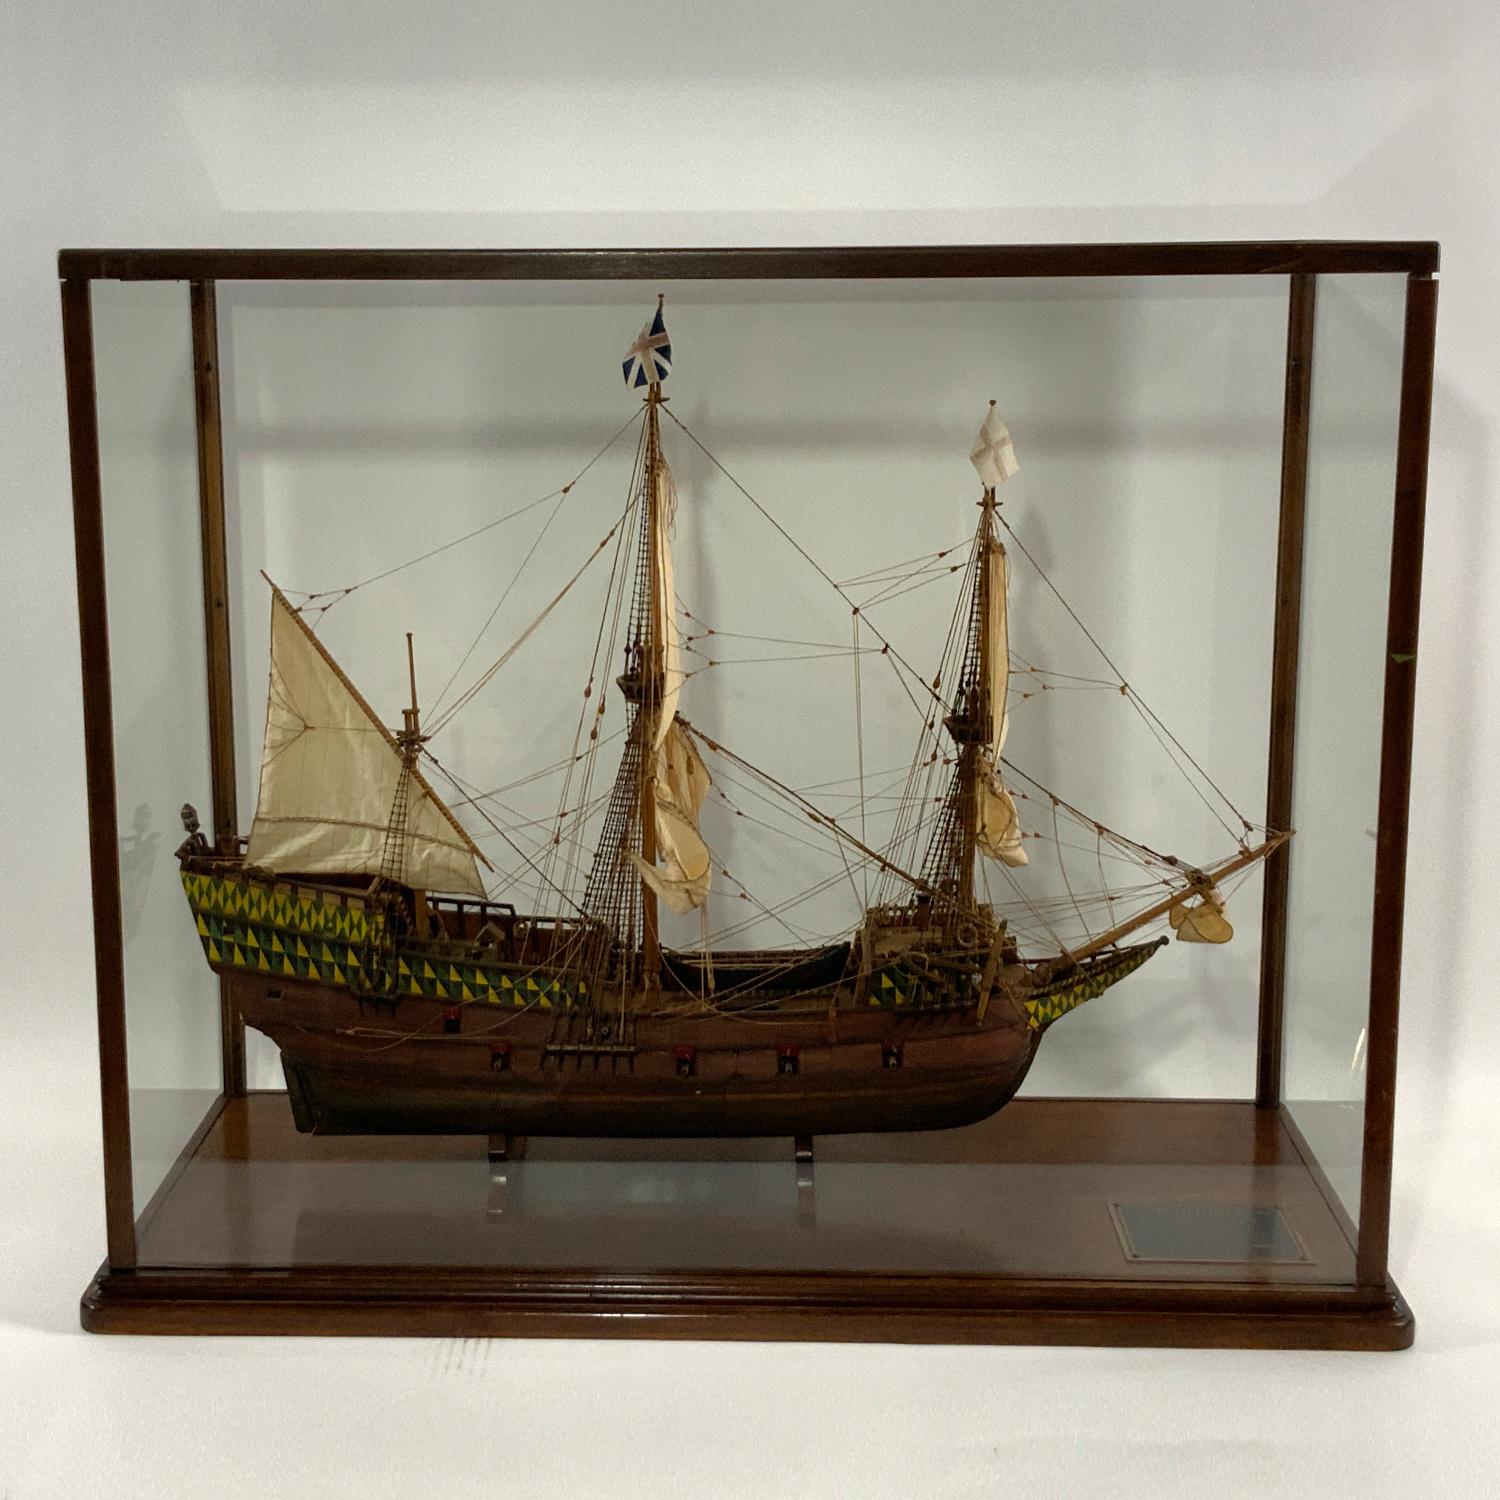 Extraordinary Walter Simonds ship model of 